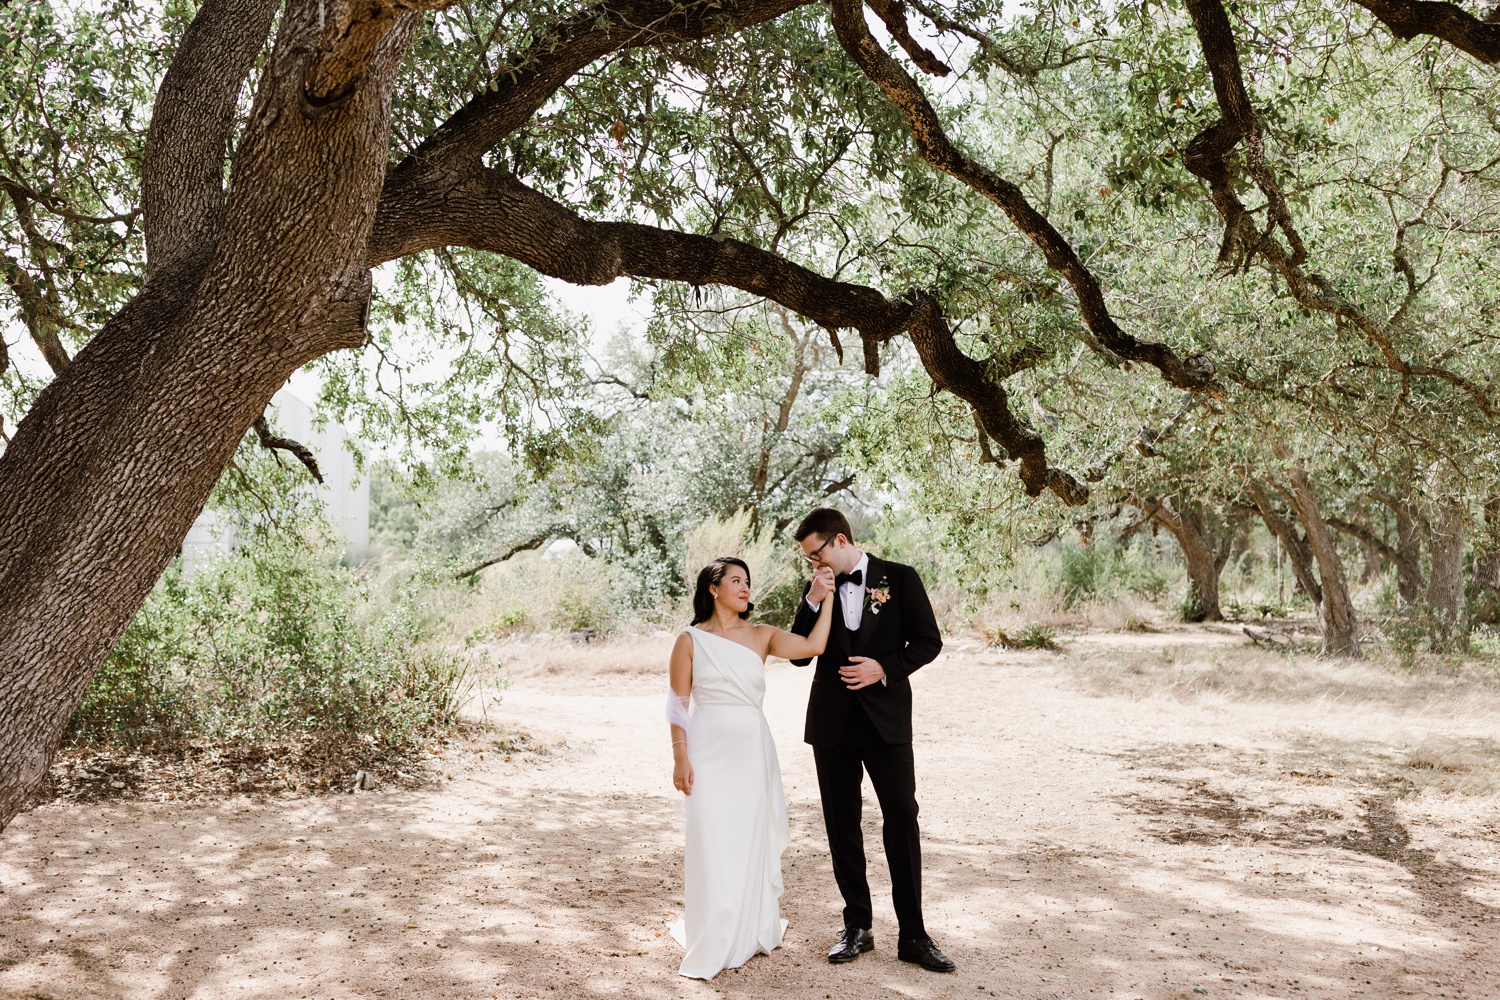 Amber Vickery Photography - Austin, TX Wedding Photographer